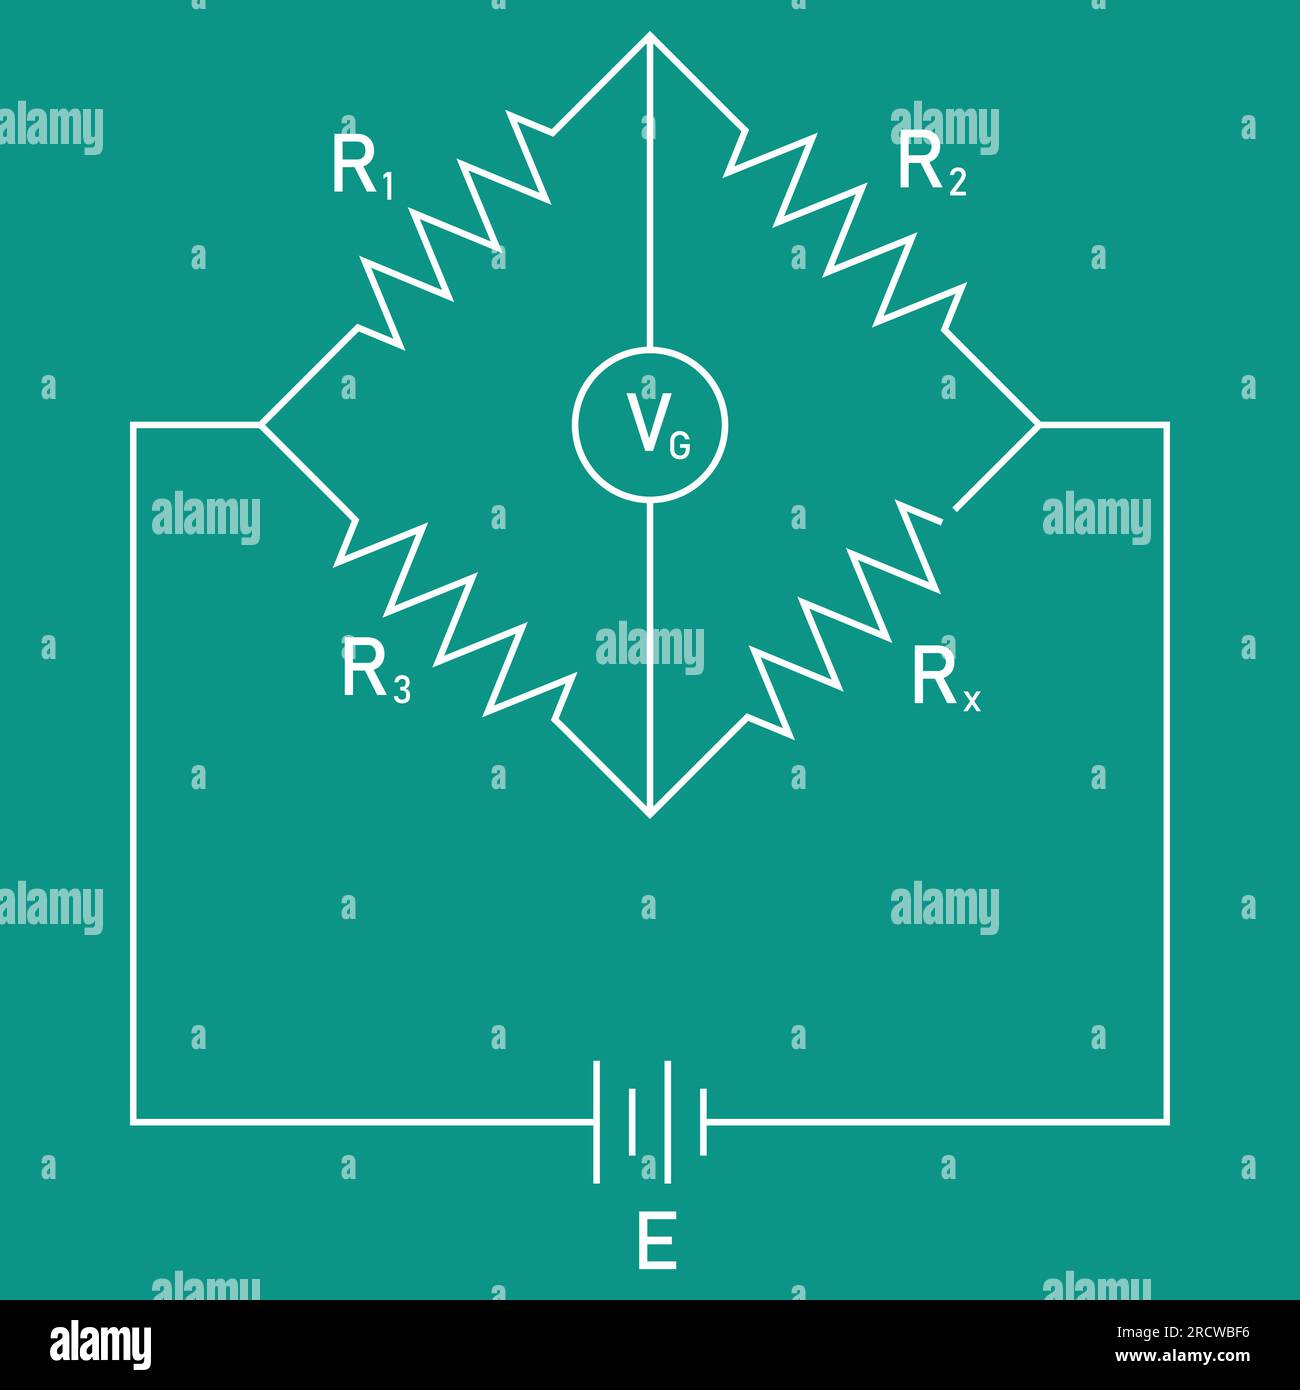 Wheatstone bridge circuit diagram. Scientific vector illustration isolated on chalkboard background. Stock Vector